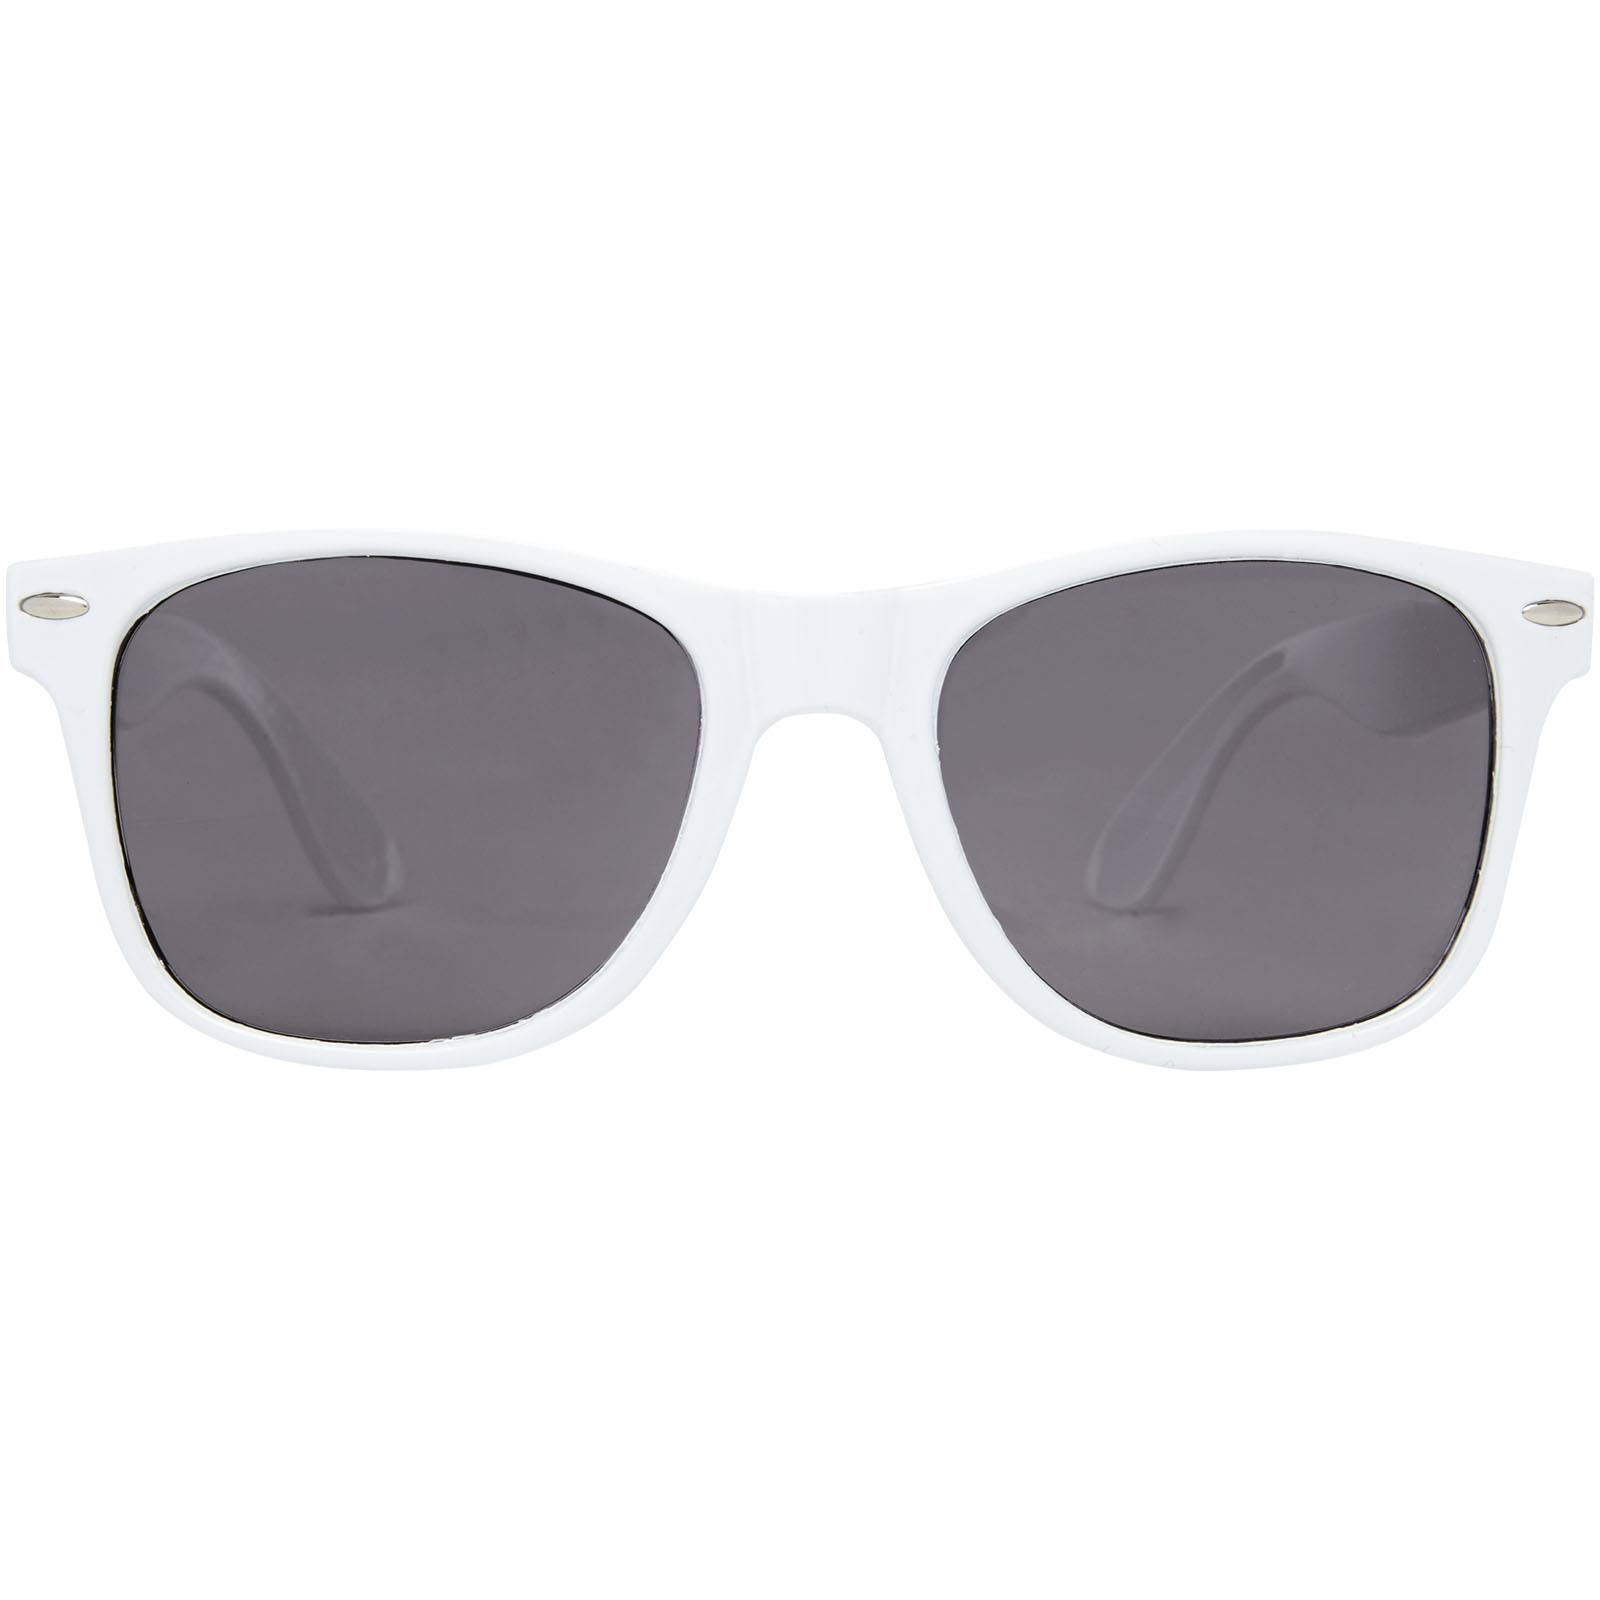 Advertising Sunglasses - Sun Ray recycled plastic sunglasses - 1